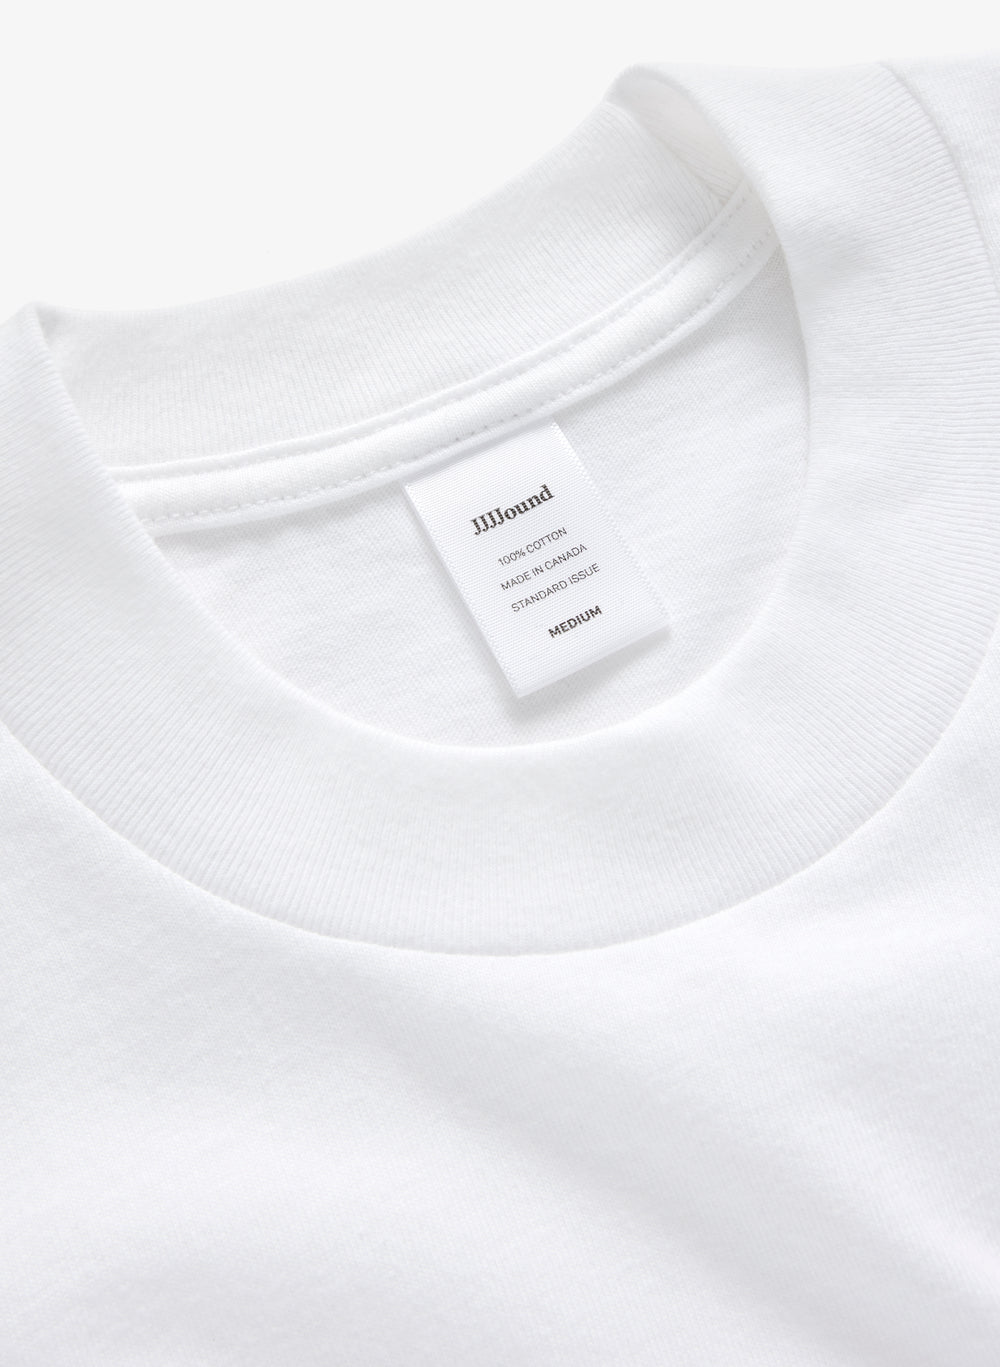 J90 T-Shirt Pocket - White